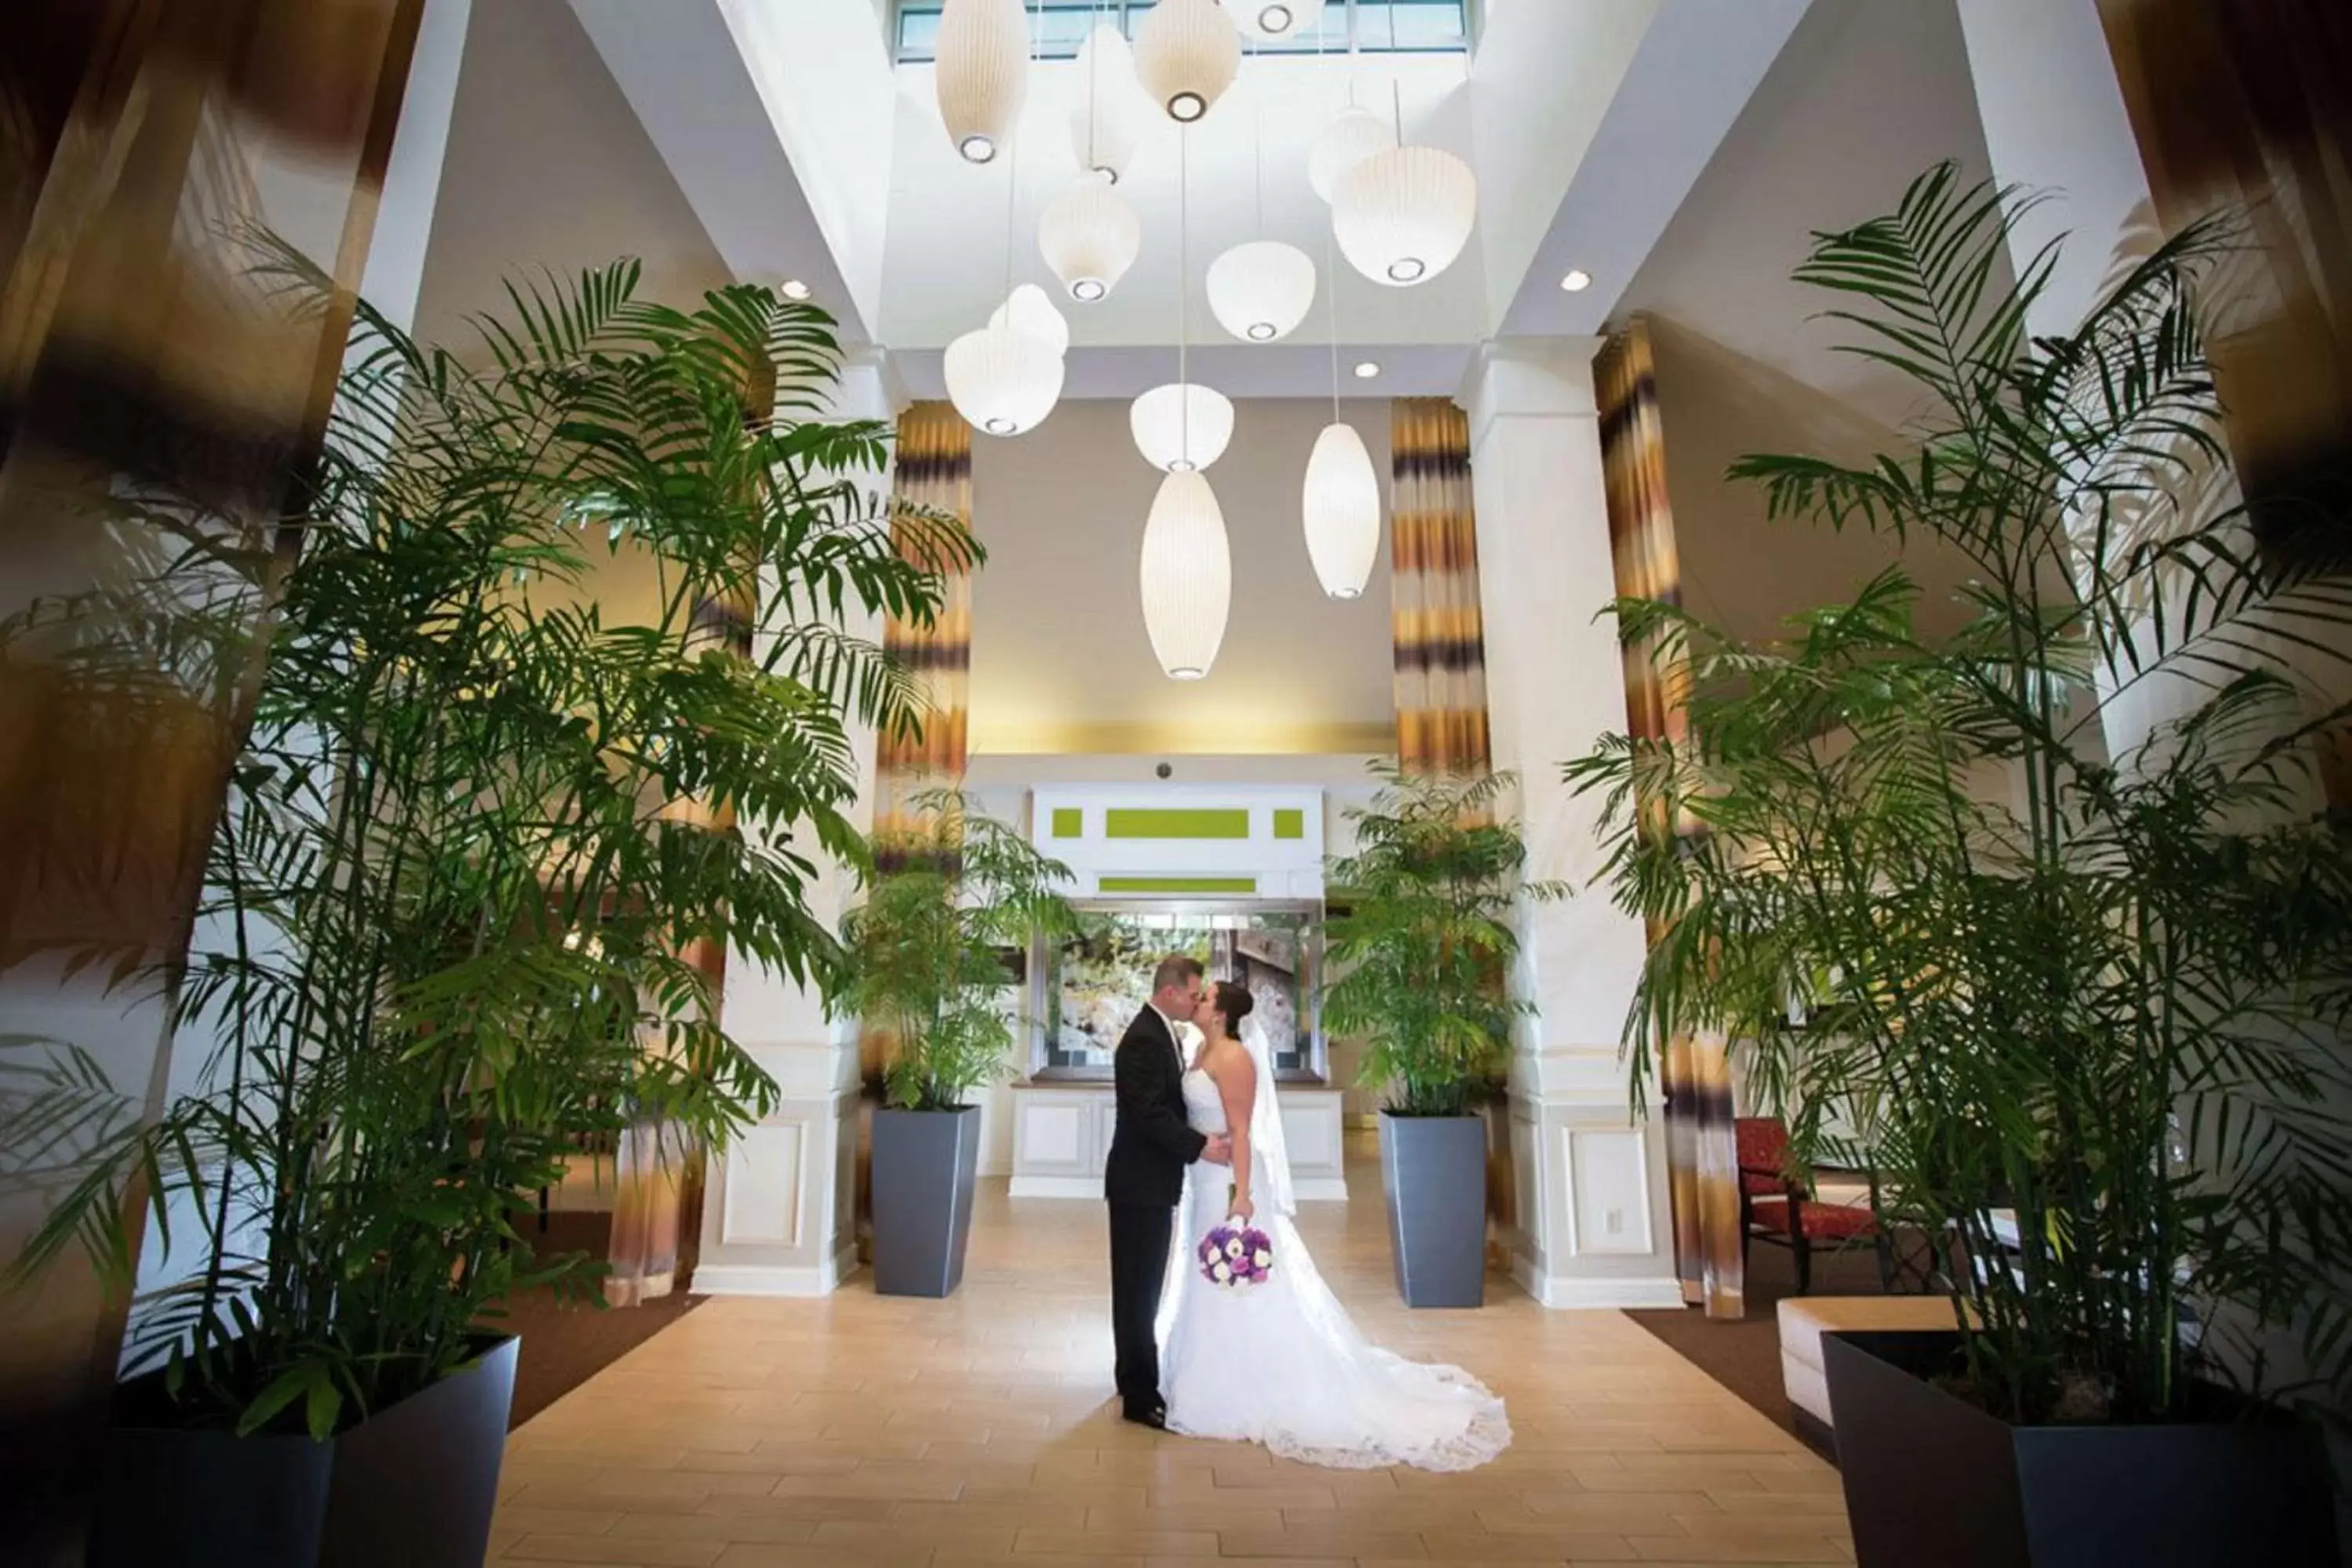 Lobby or reception, Banquet Facilities in Hilton Garden Inn Pittsburgh/Southpointe